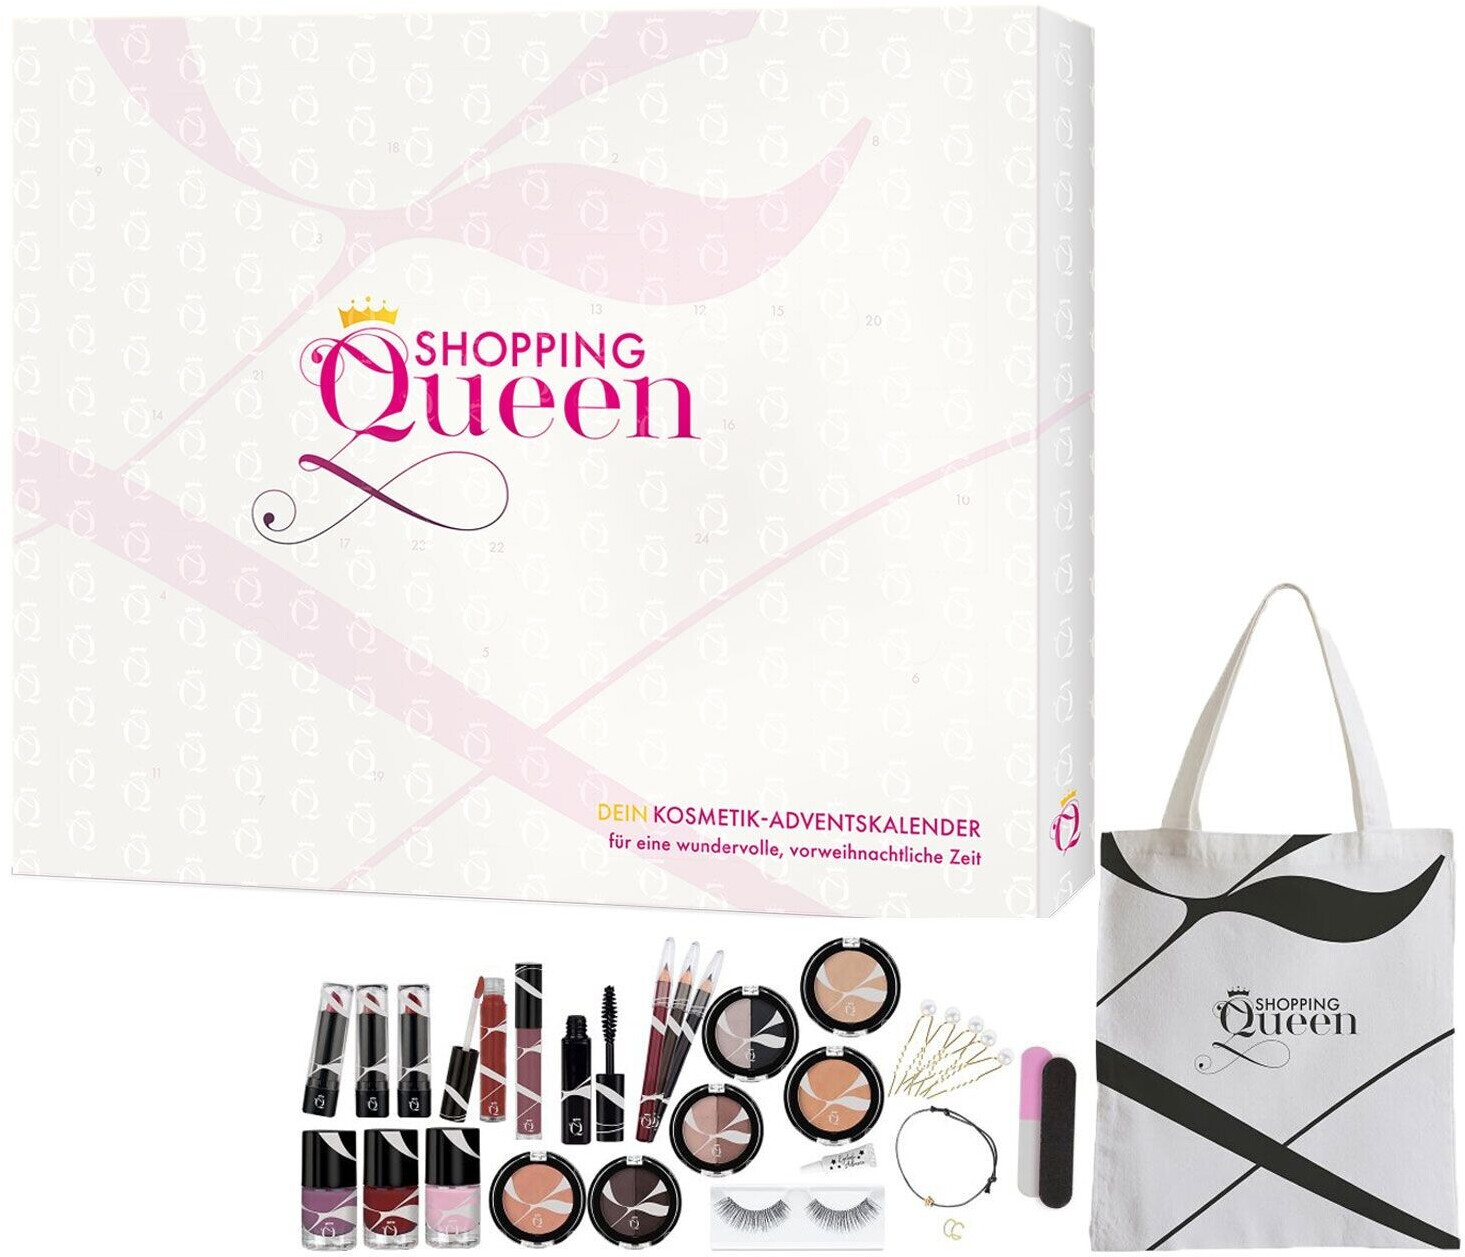 Shopping Queen Shopping € Adventskalender Preisvergleich ab Queen bei Kosmetik 28,91 